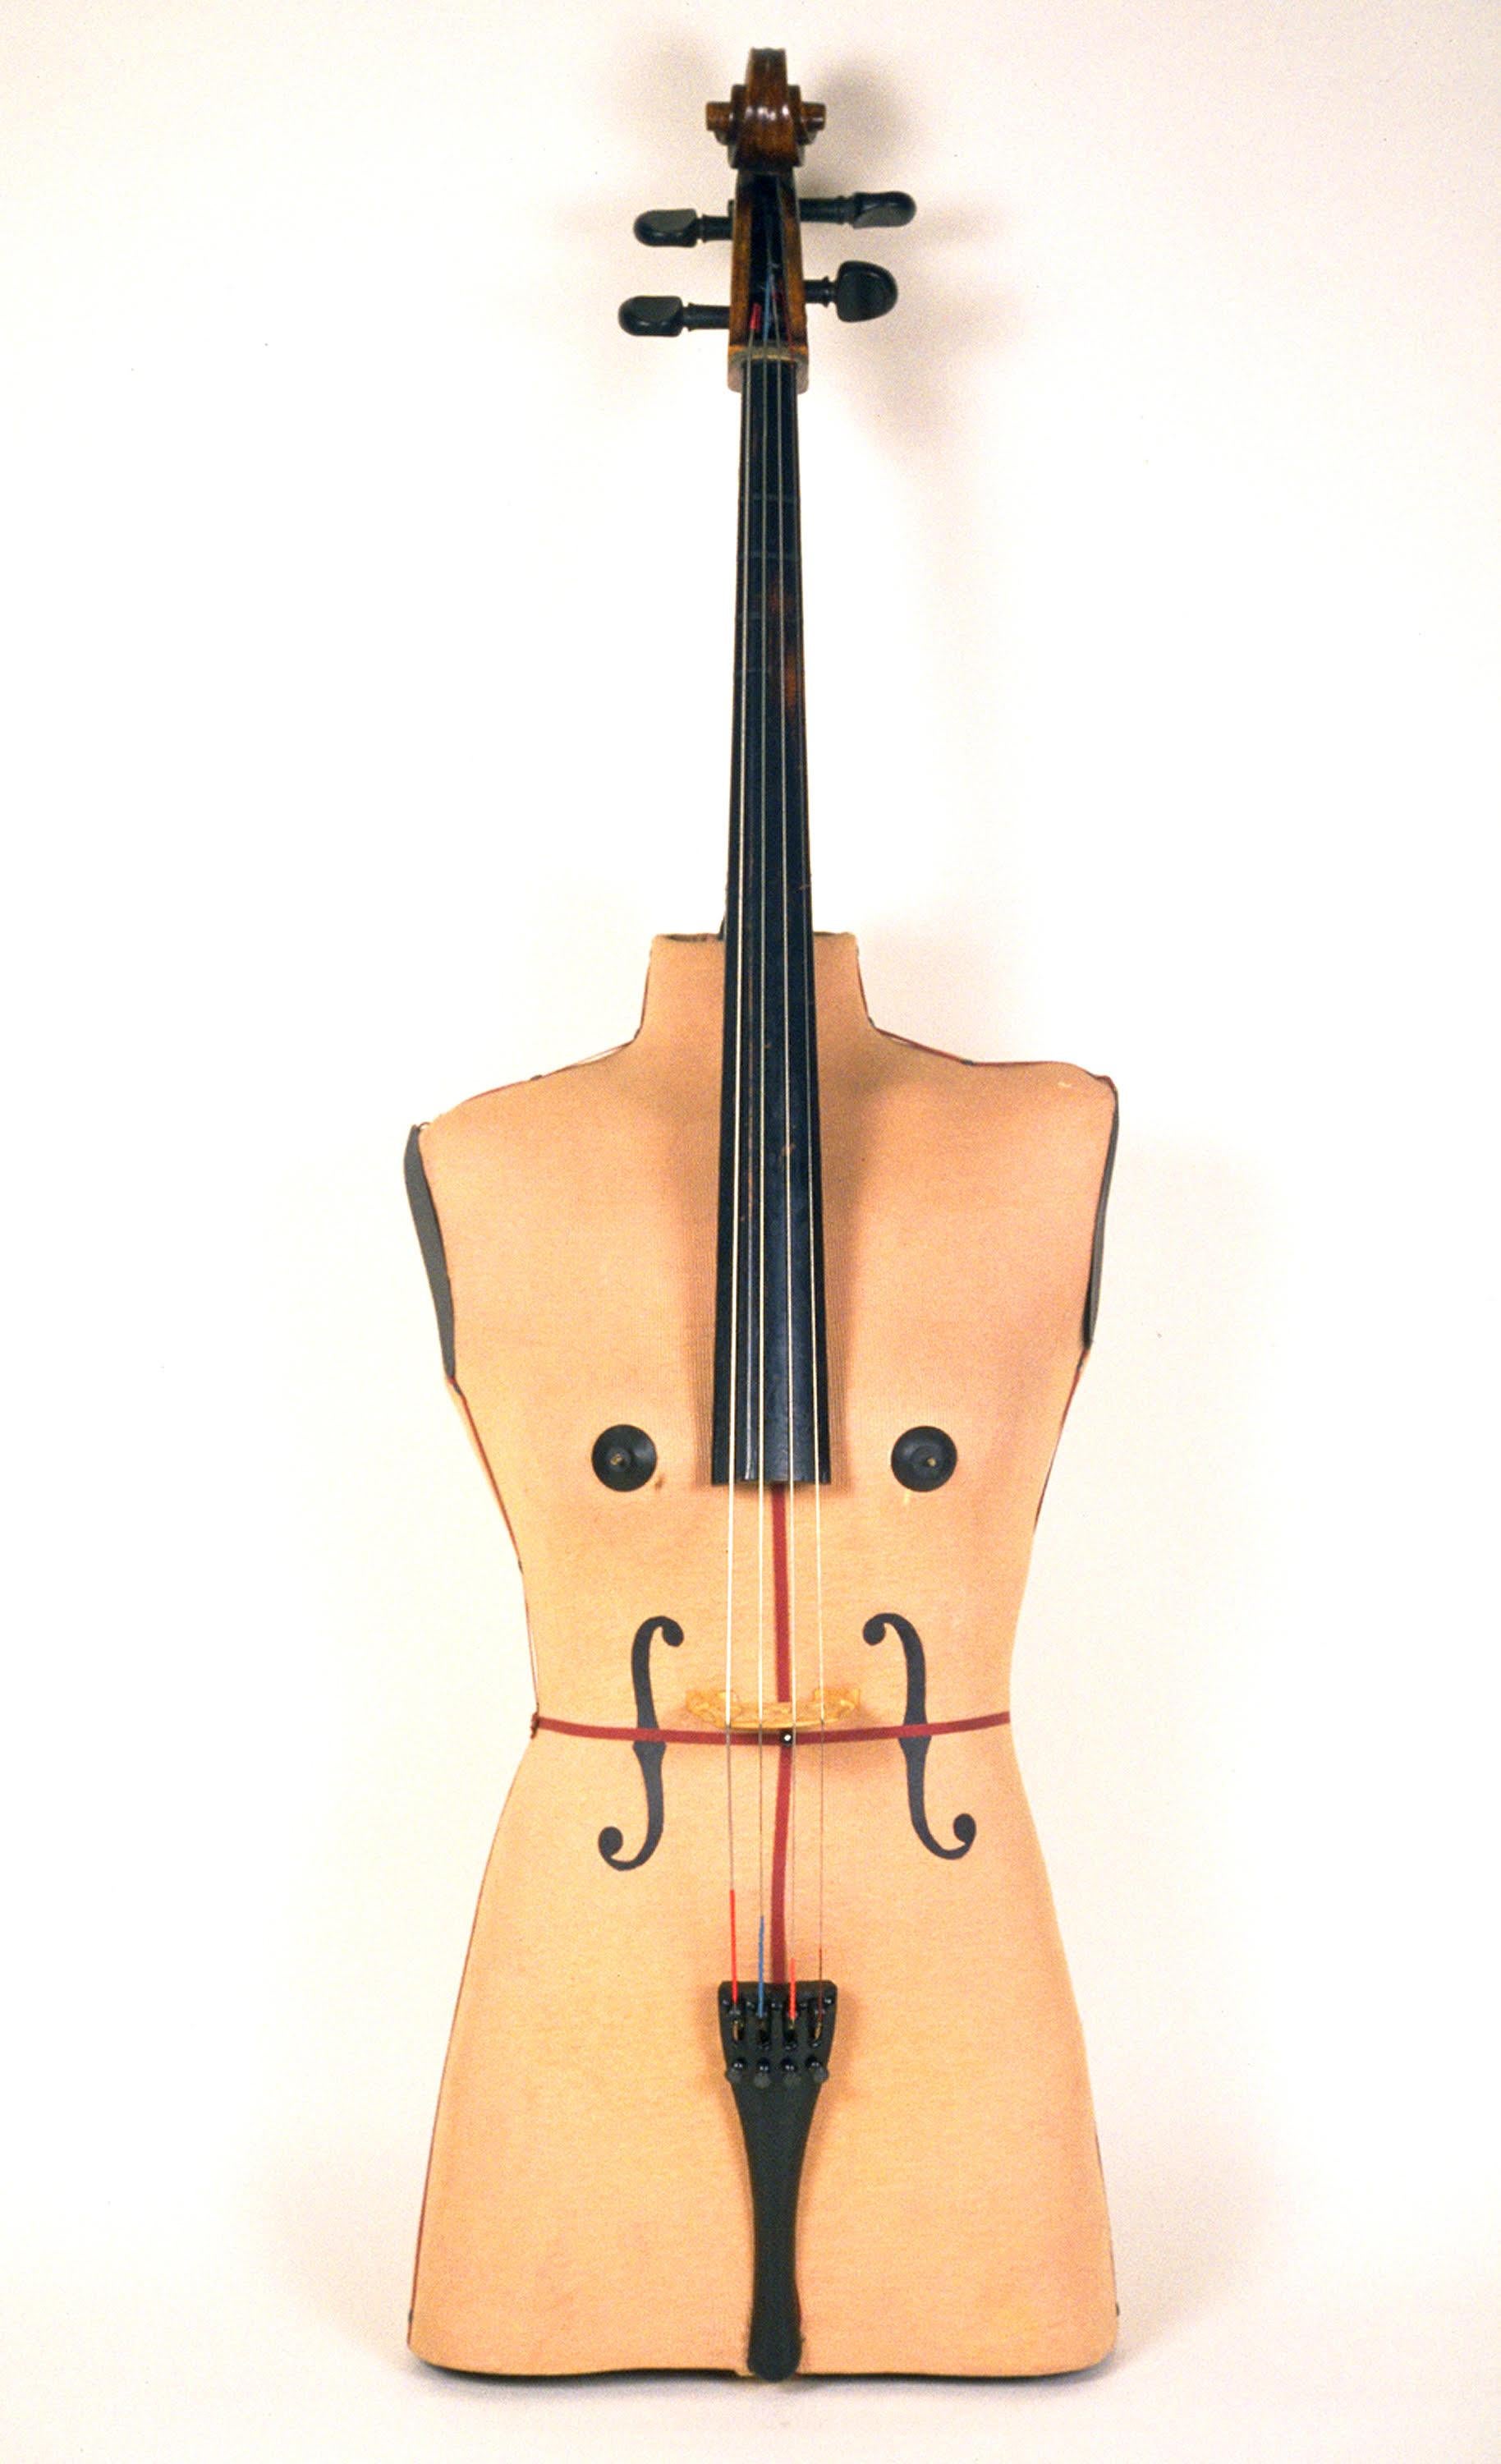 "Torso Cello" hybrid musical instrument sculpture, assemblage